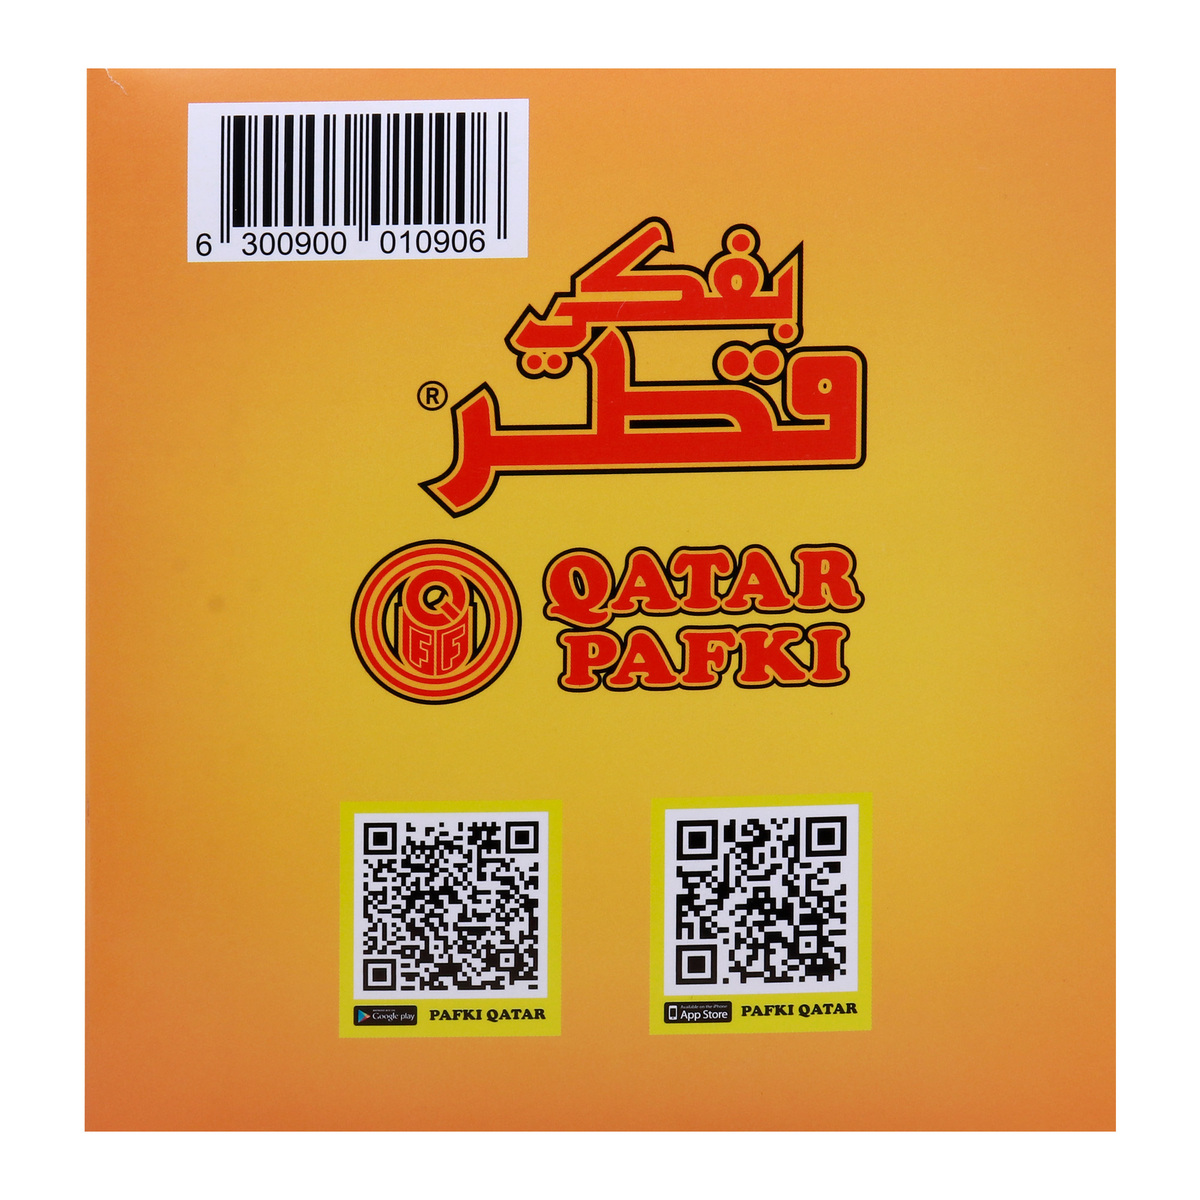 Qatar Pafki Garangao Box 197 g